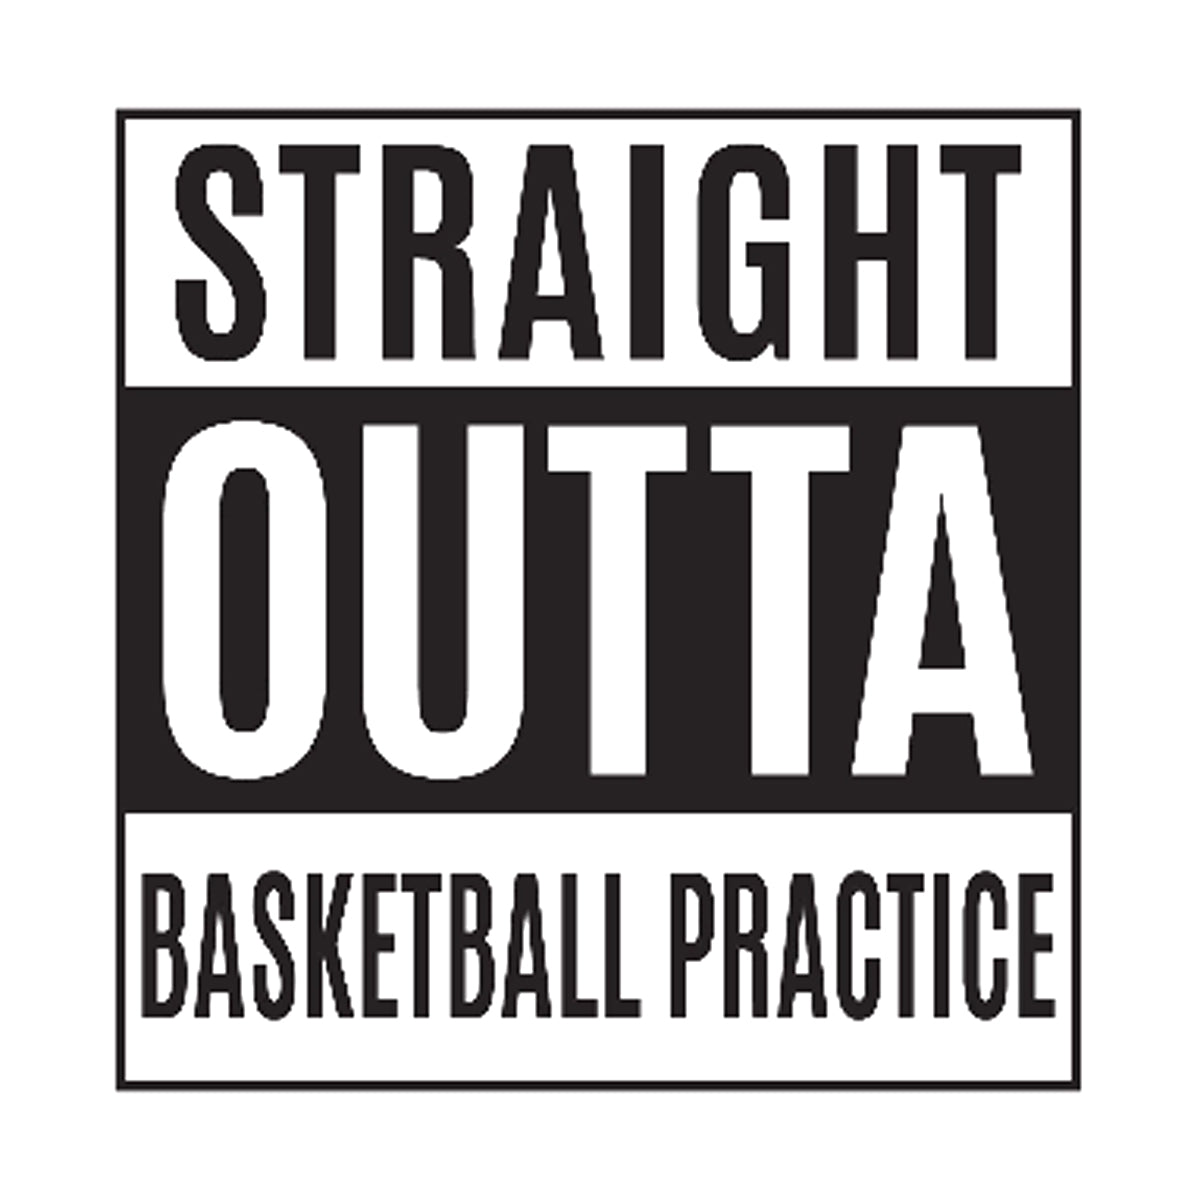 Straight Outta Basketball Practice Tee Humorous Shirt 411 